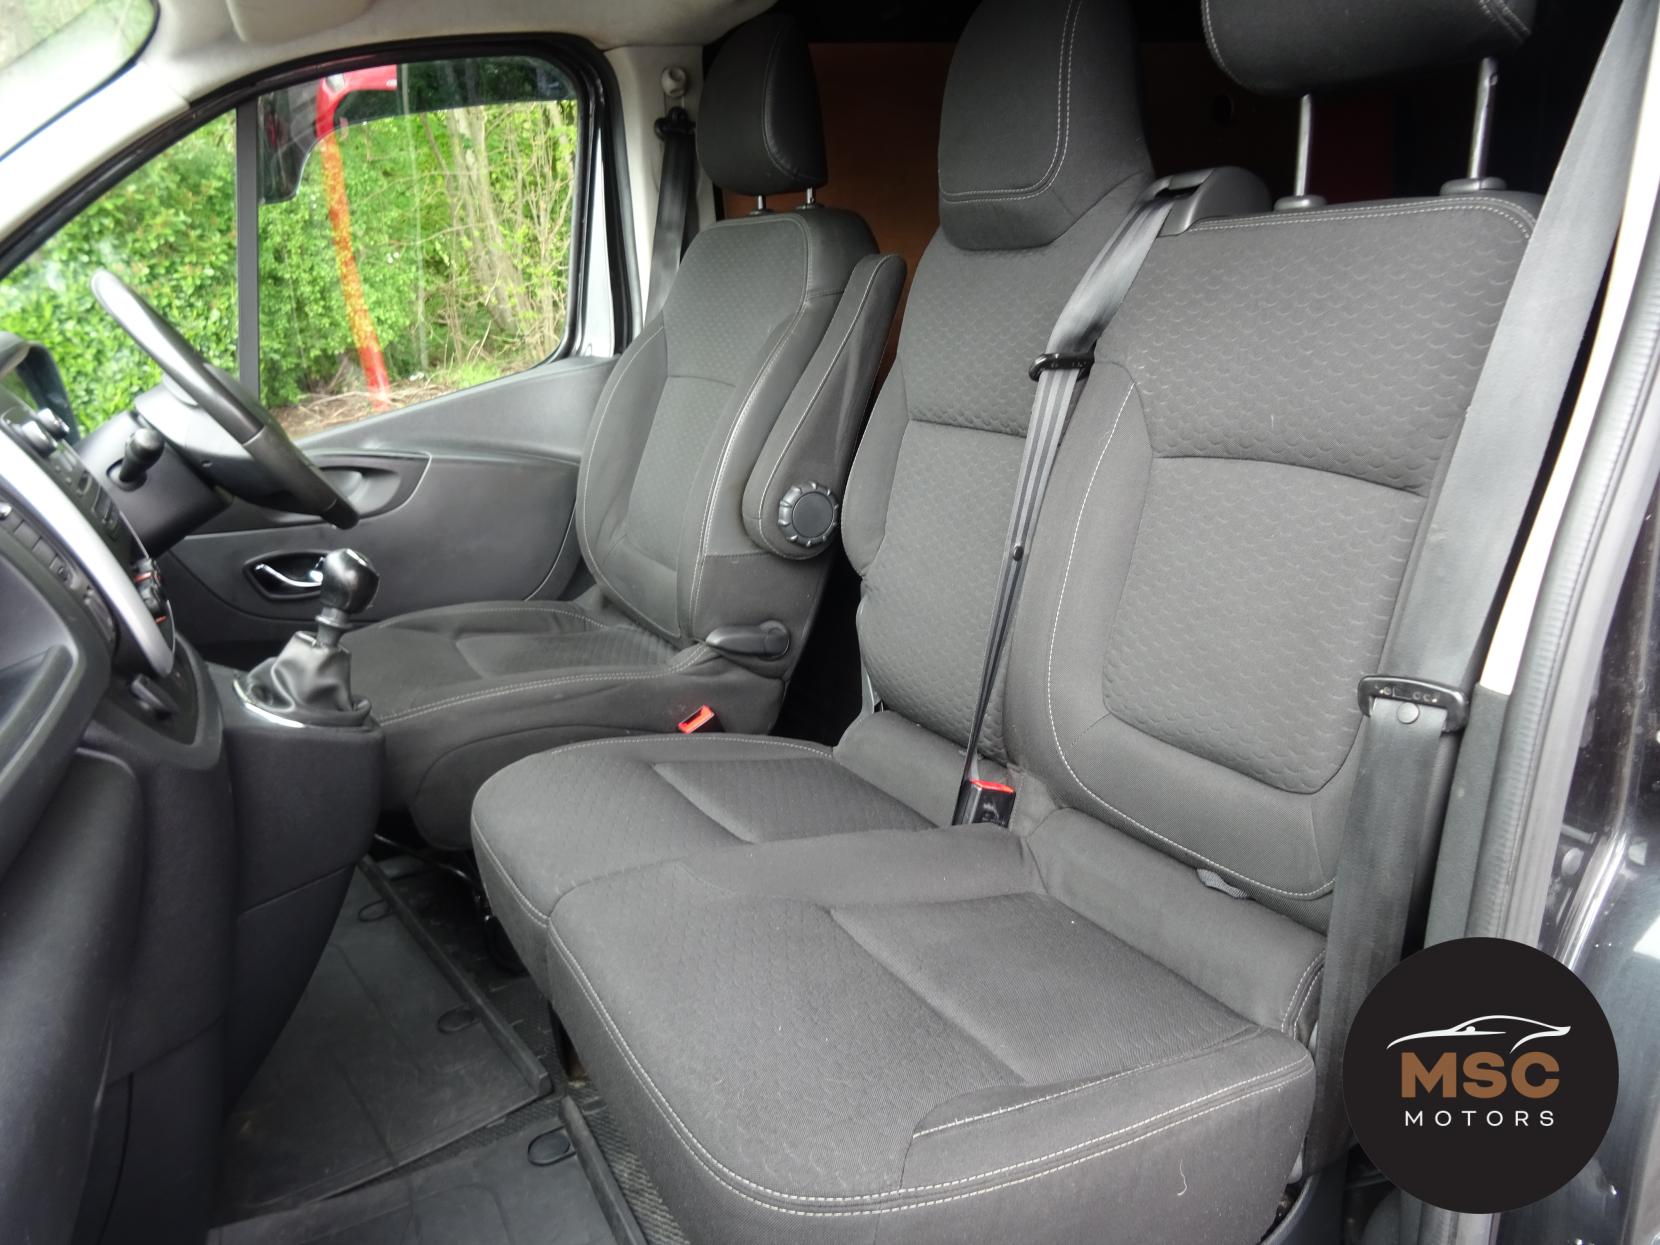 Vauxhall Vivaro 1.6 CDTi 2700 BiTurbo ecoFLEX Sportive Panel Van 5dr Diesel Manual L1 H1 Euro 5 (s/s) (120 ps)